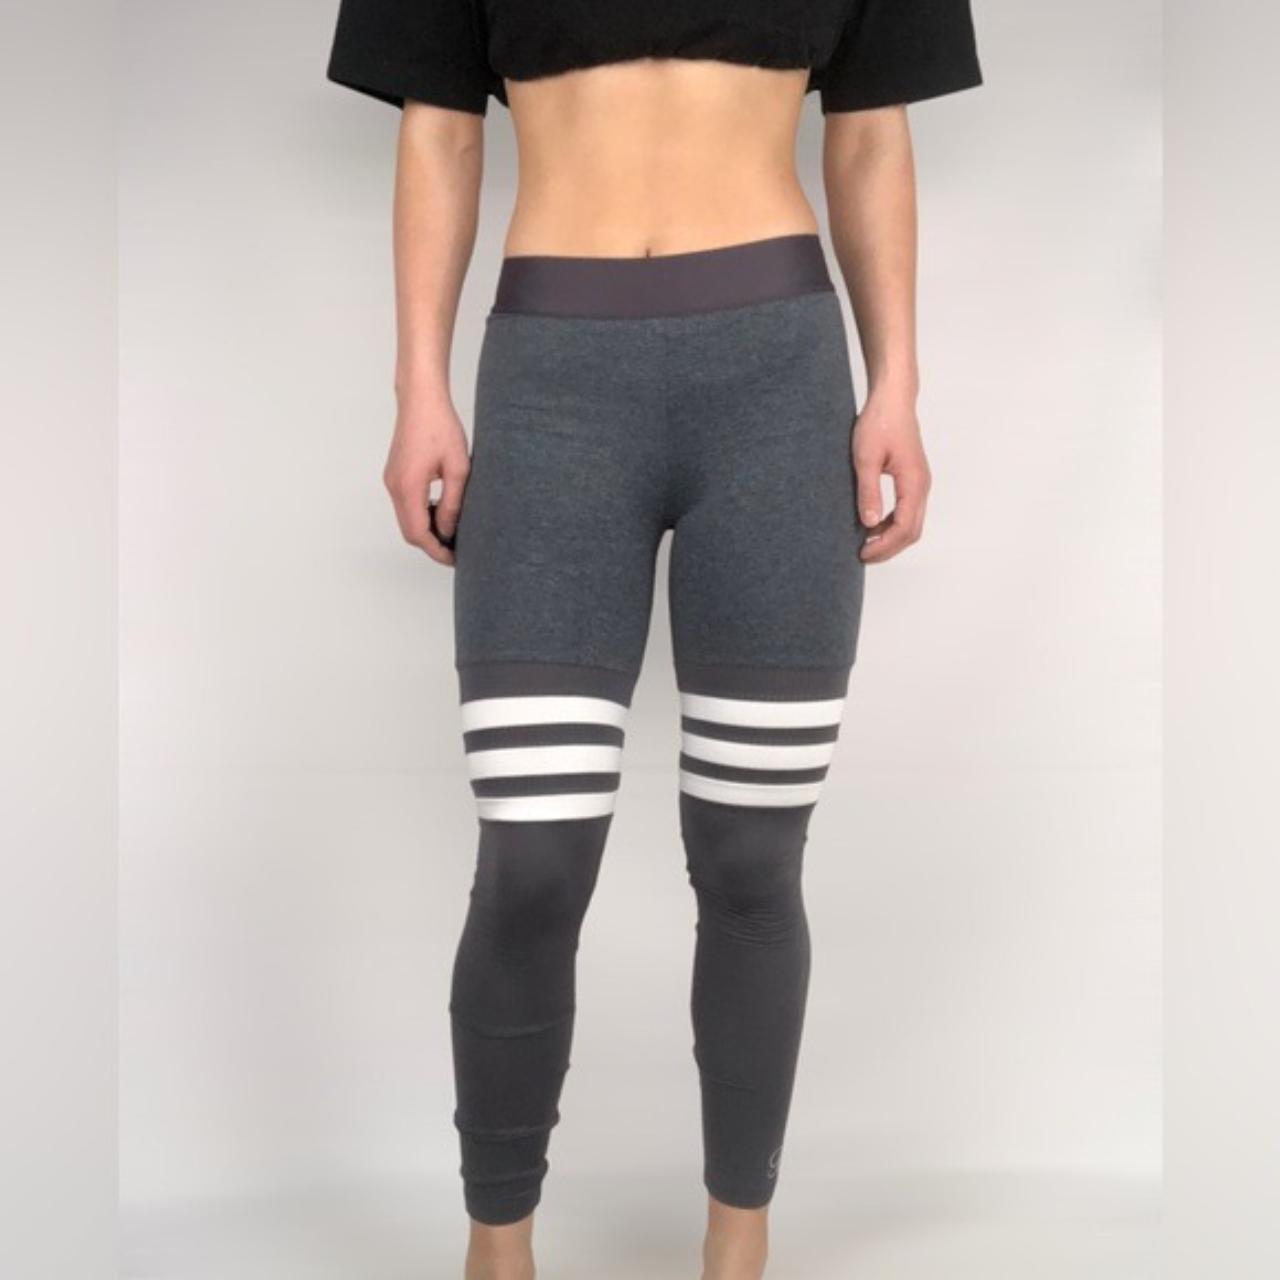 Buy Bombshell Sportswear Thigh High Leggings Grey/Black (Medium